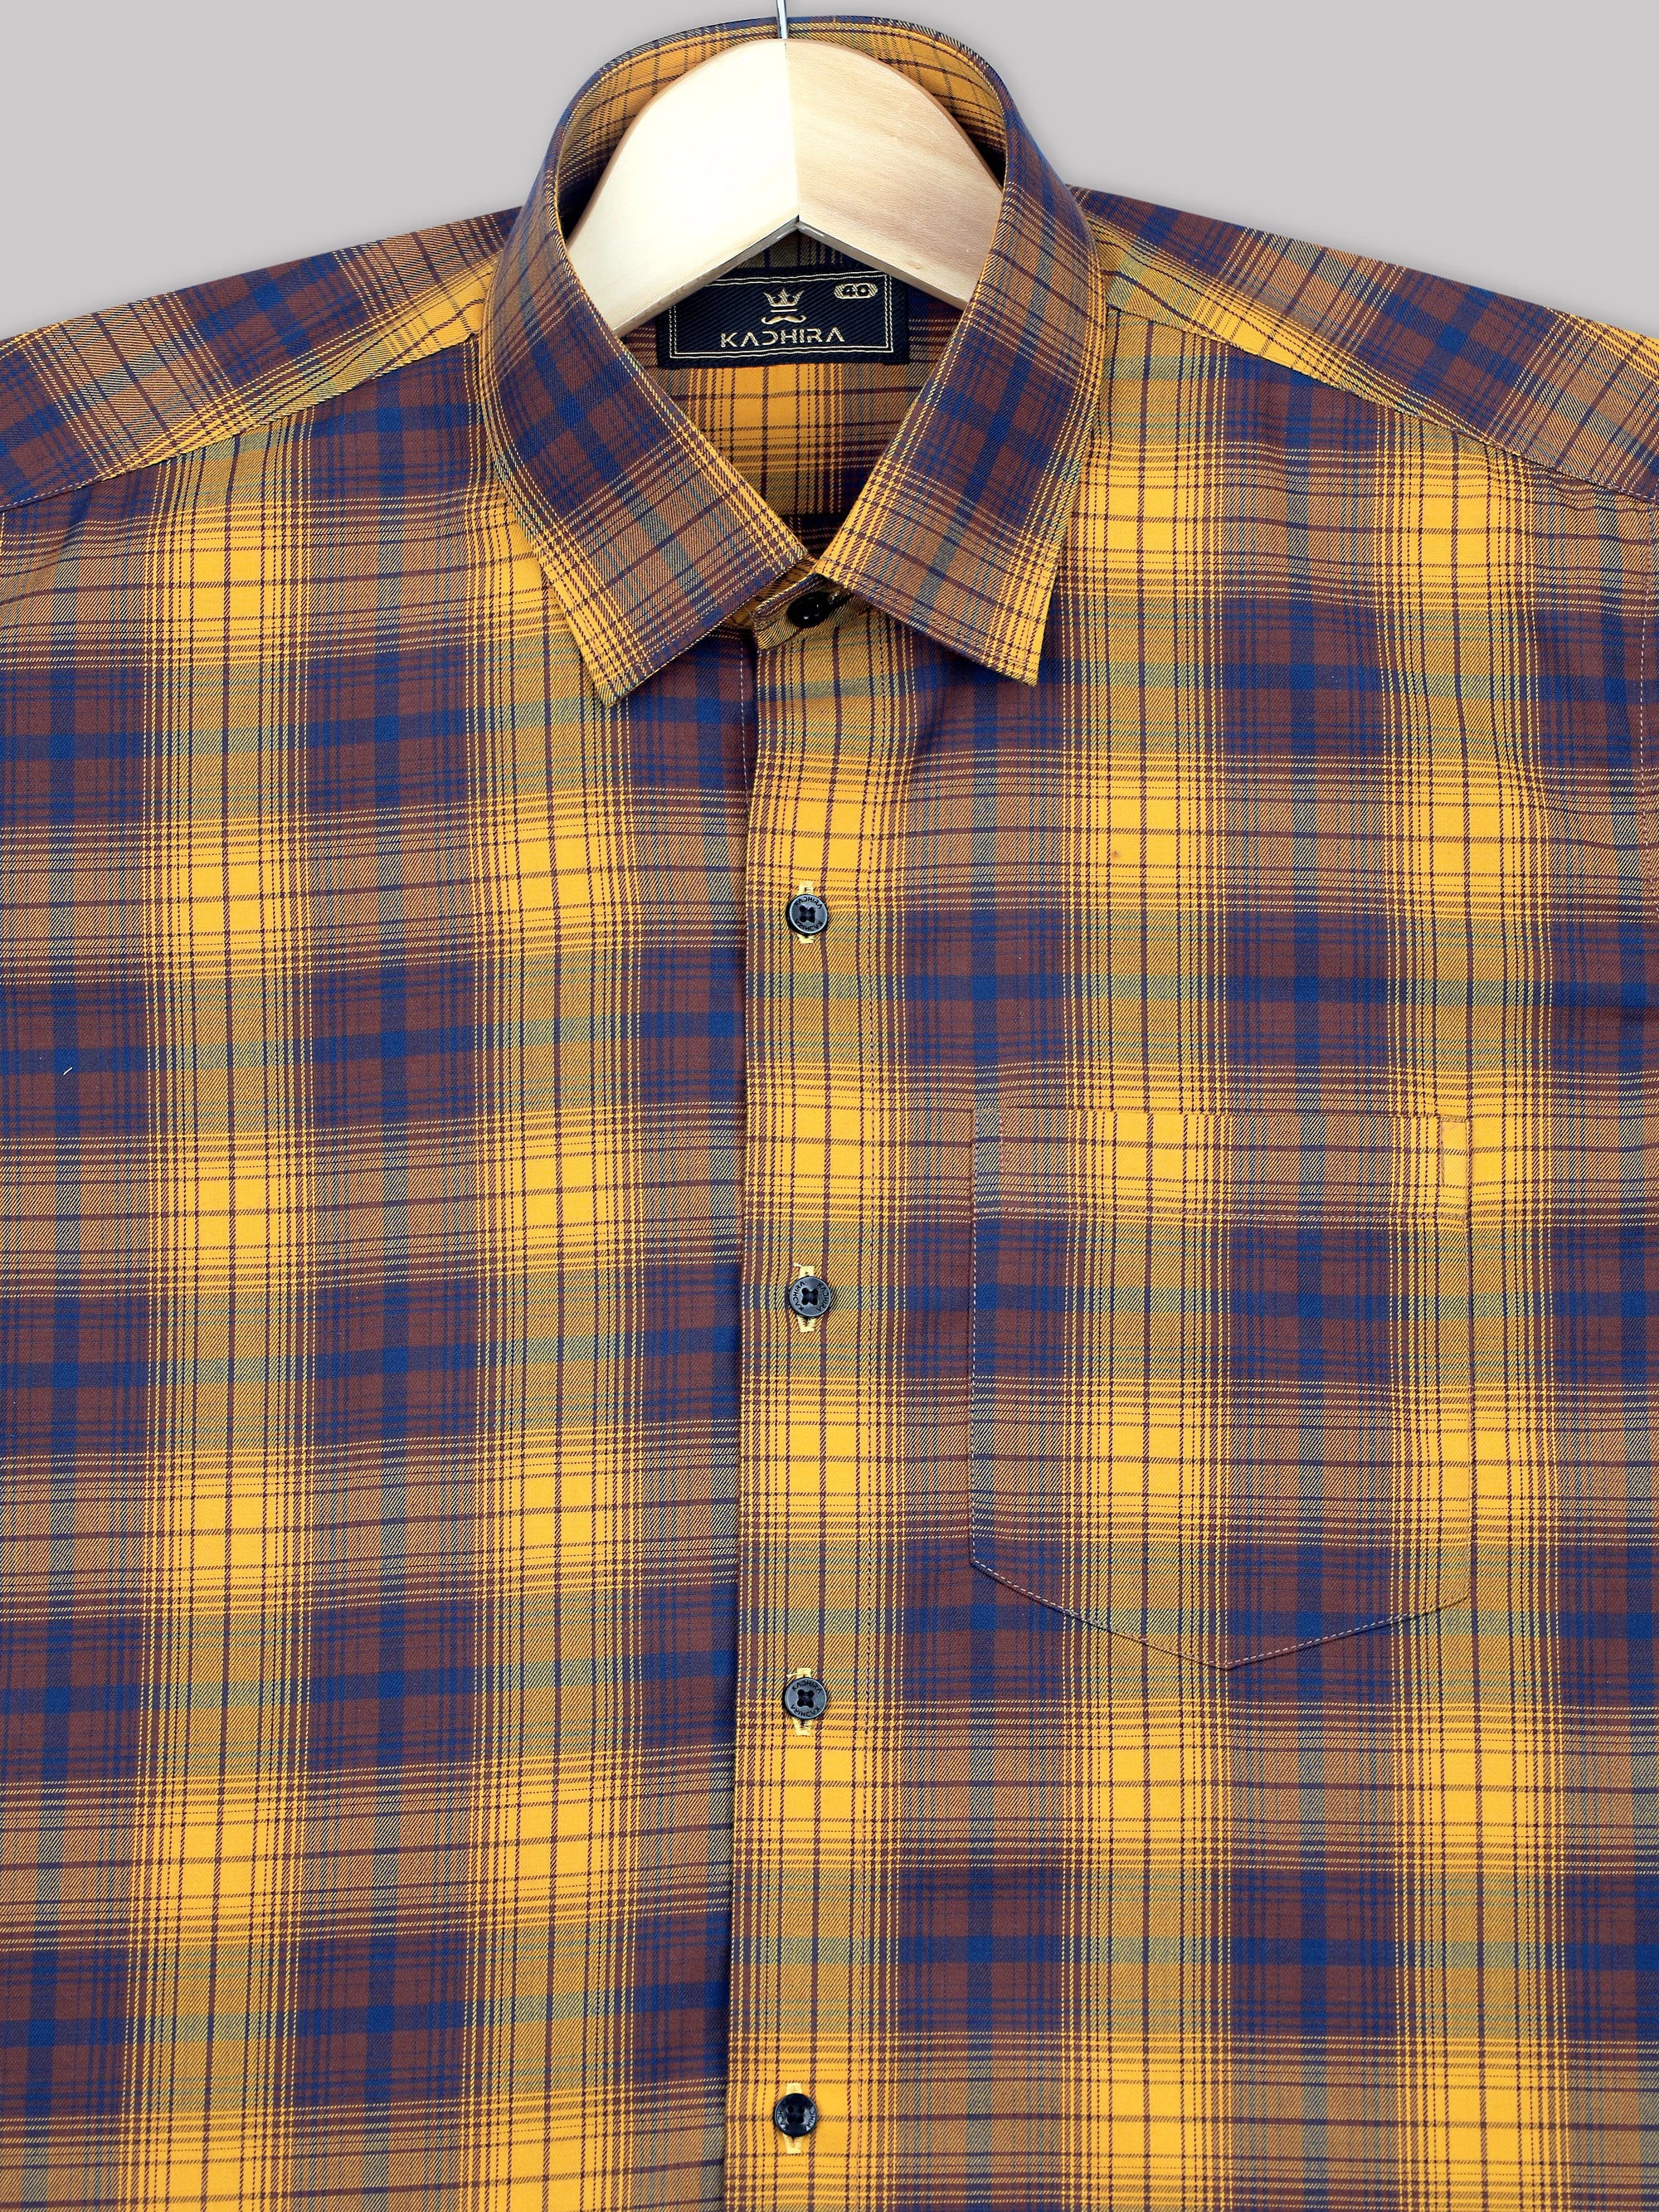 Mustard Yellow With Brown-Blue Plaid Premium Cotton Shirt